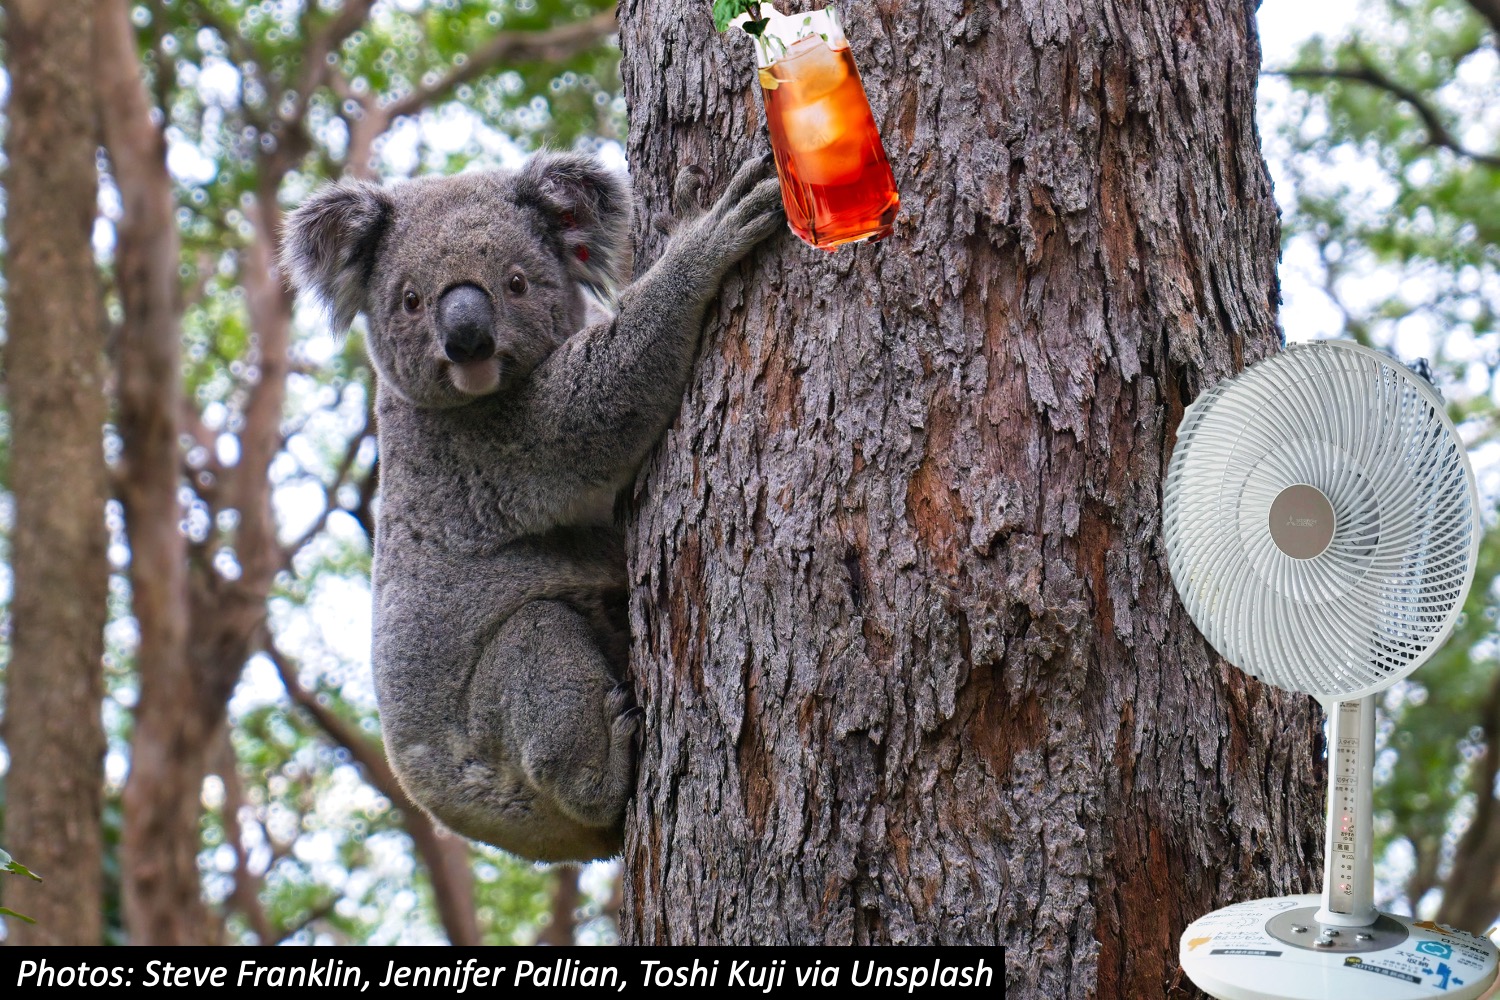 Should You Cuddle a Koala?